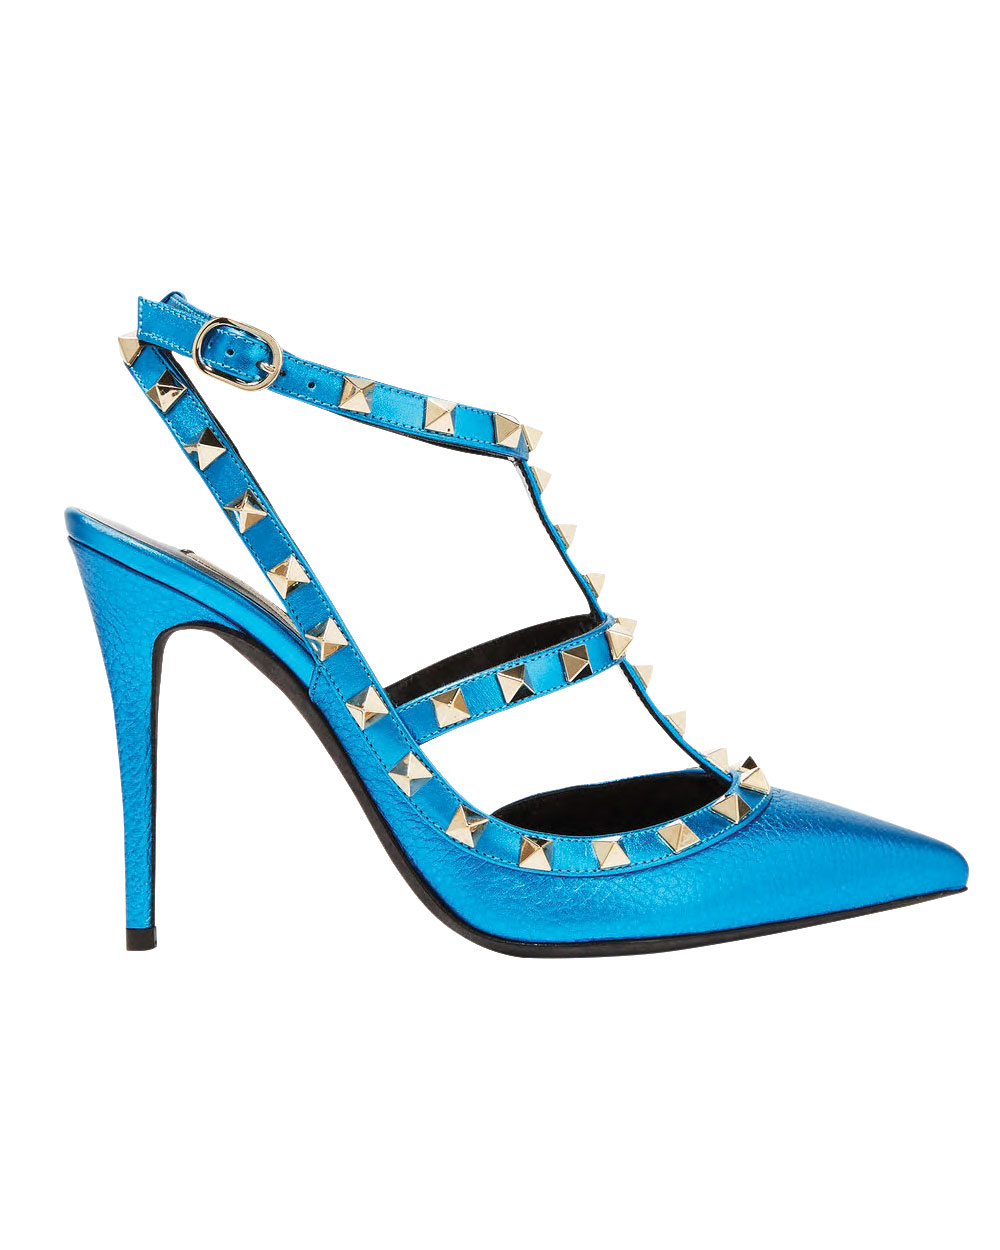 Valentino heels, $1164, from Net-a-Porter